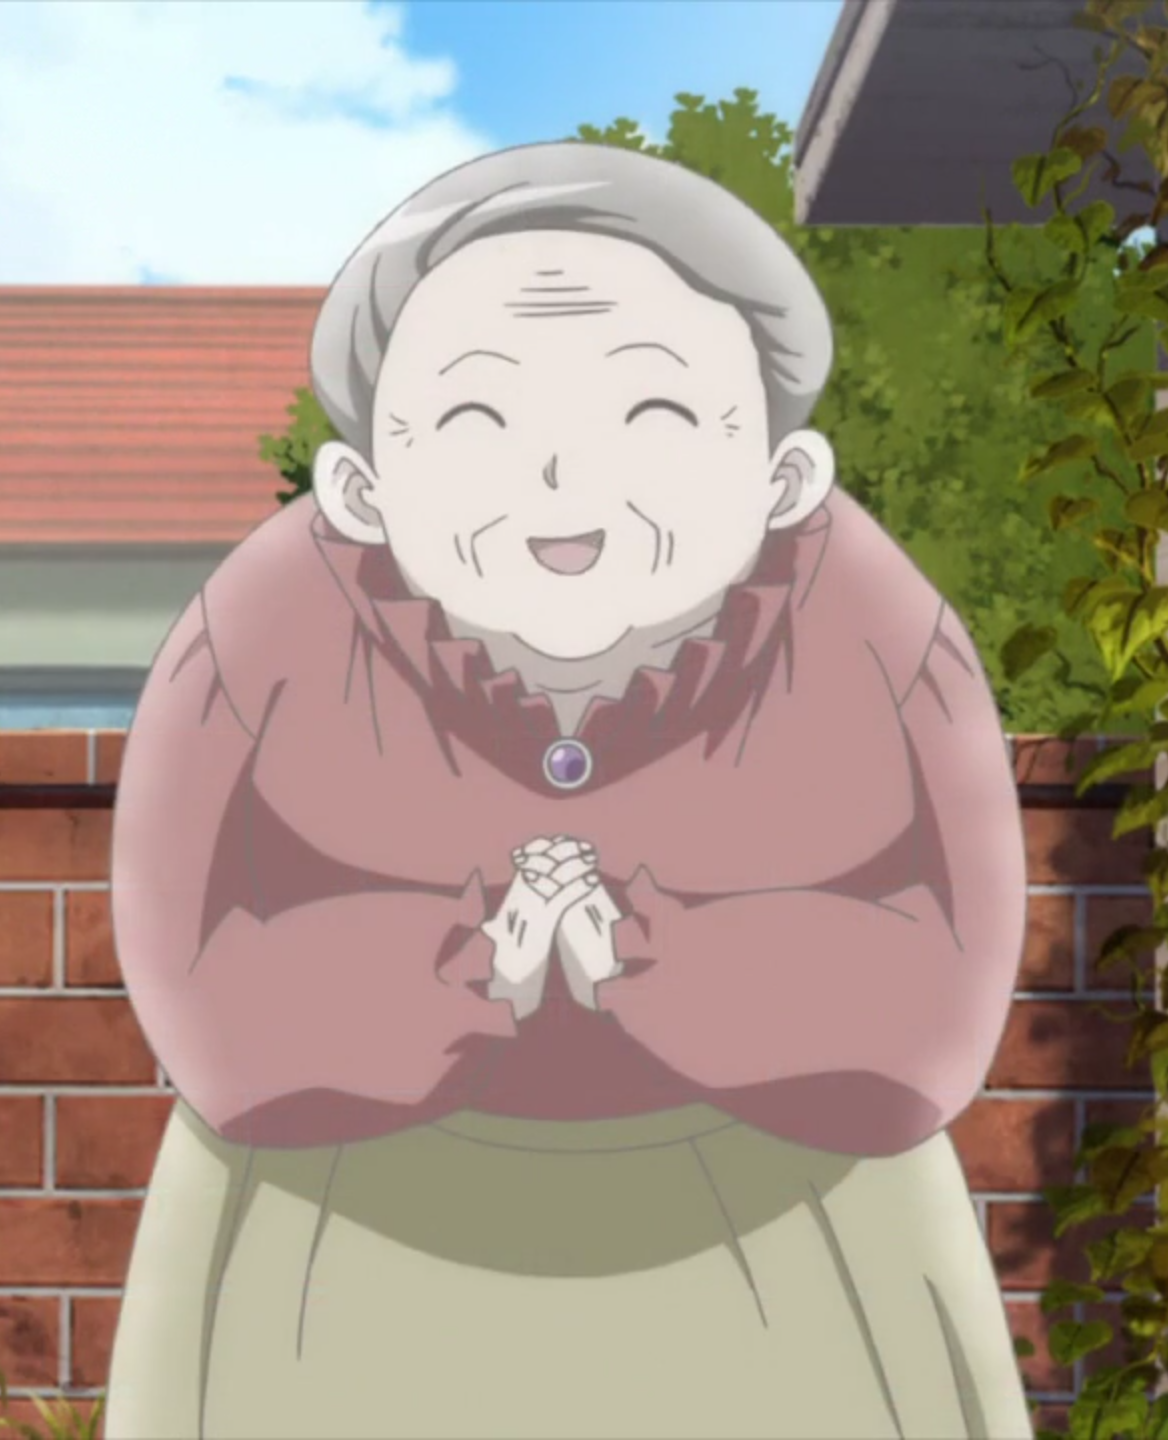 ArtStation  Cool Anime Characters  Elderly Couple